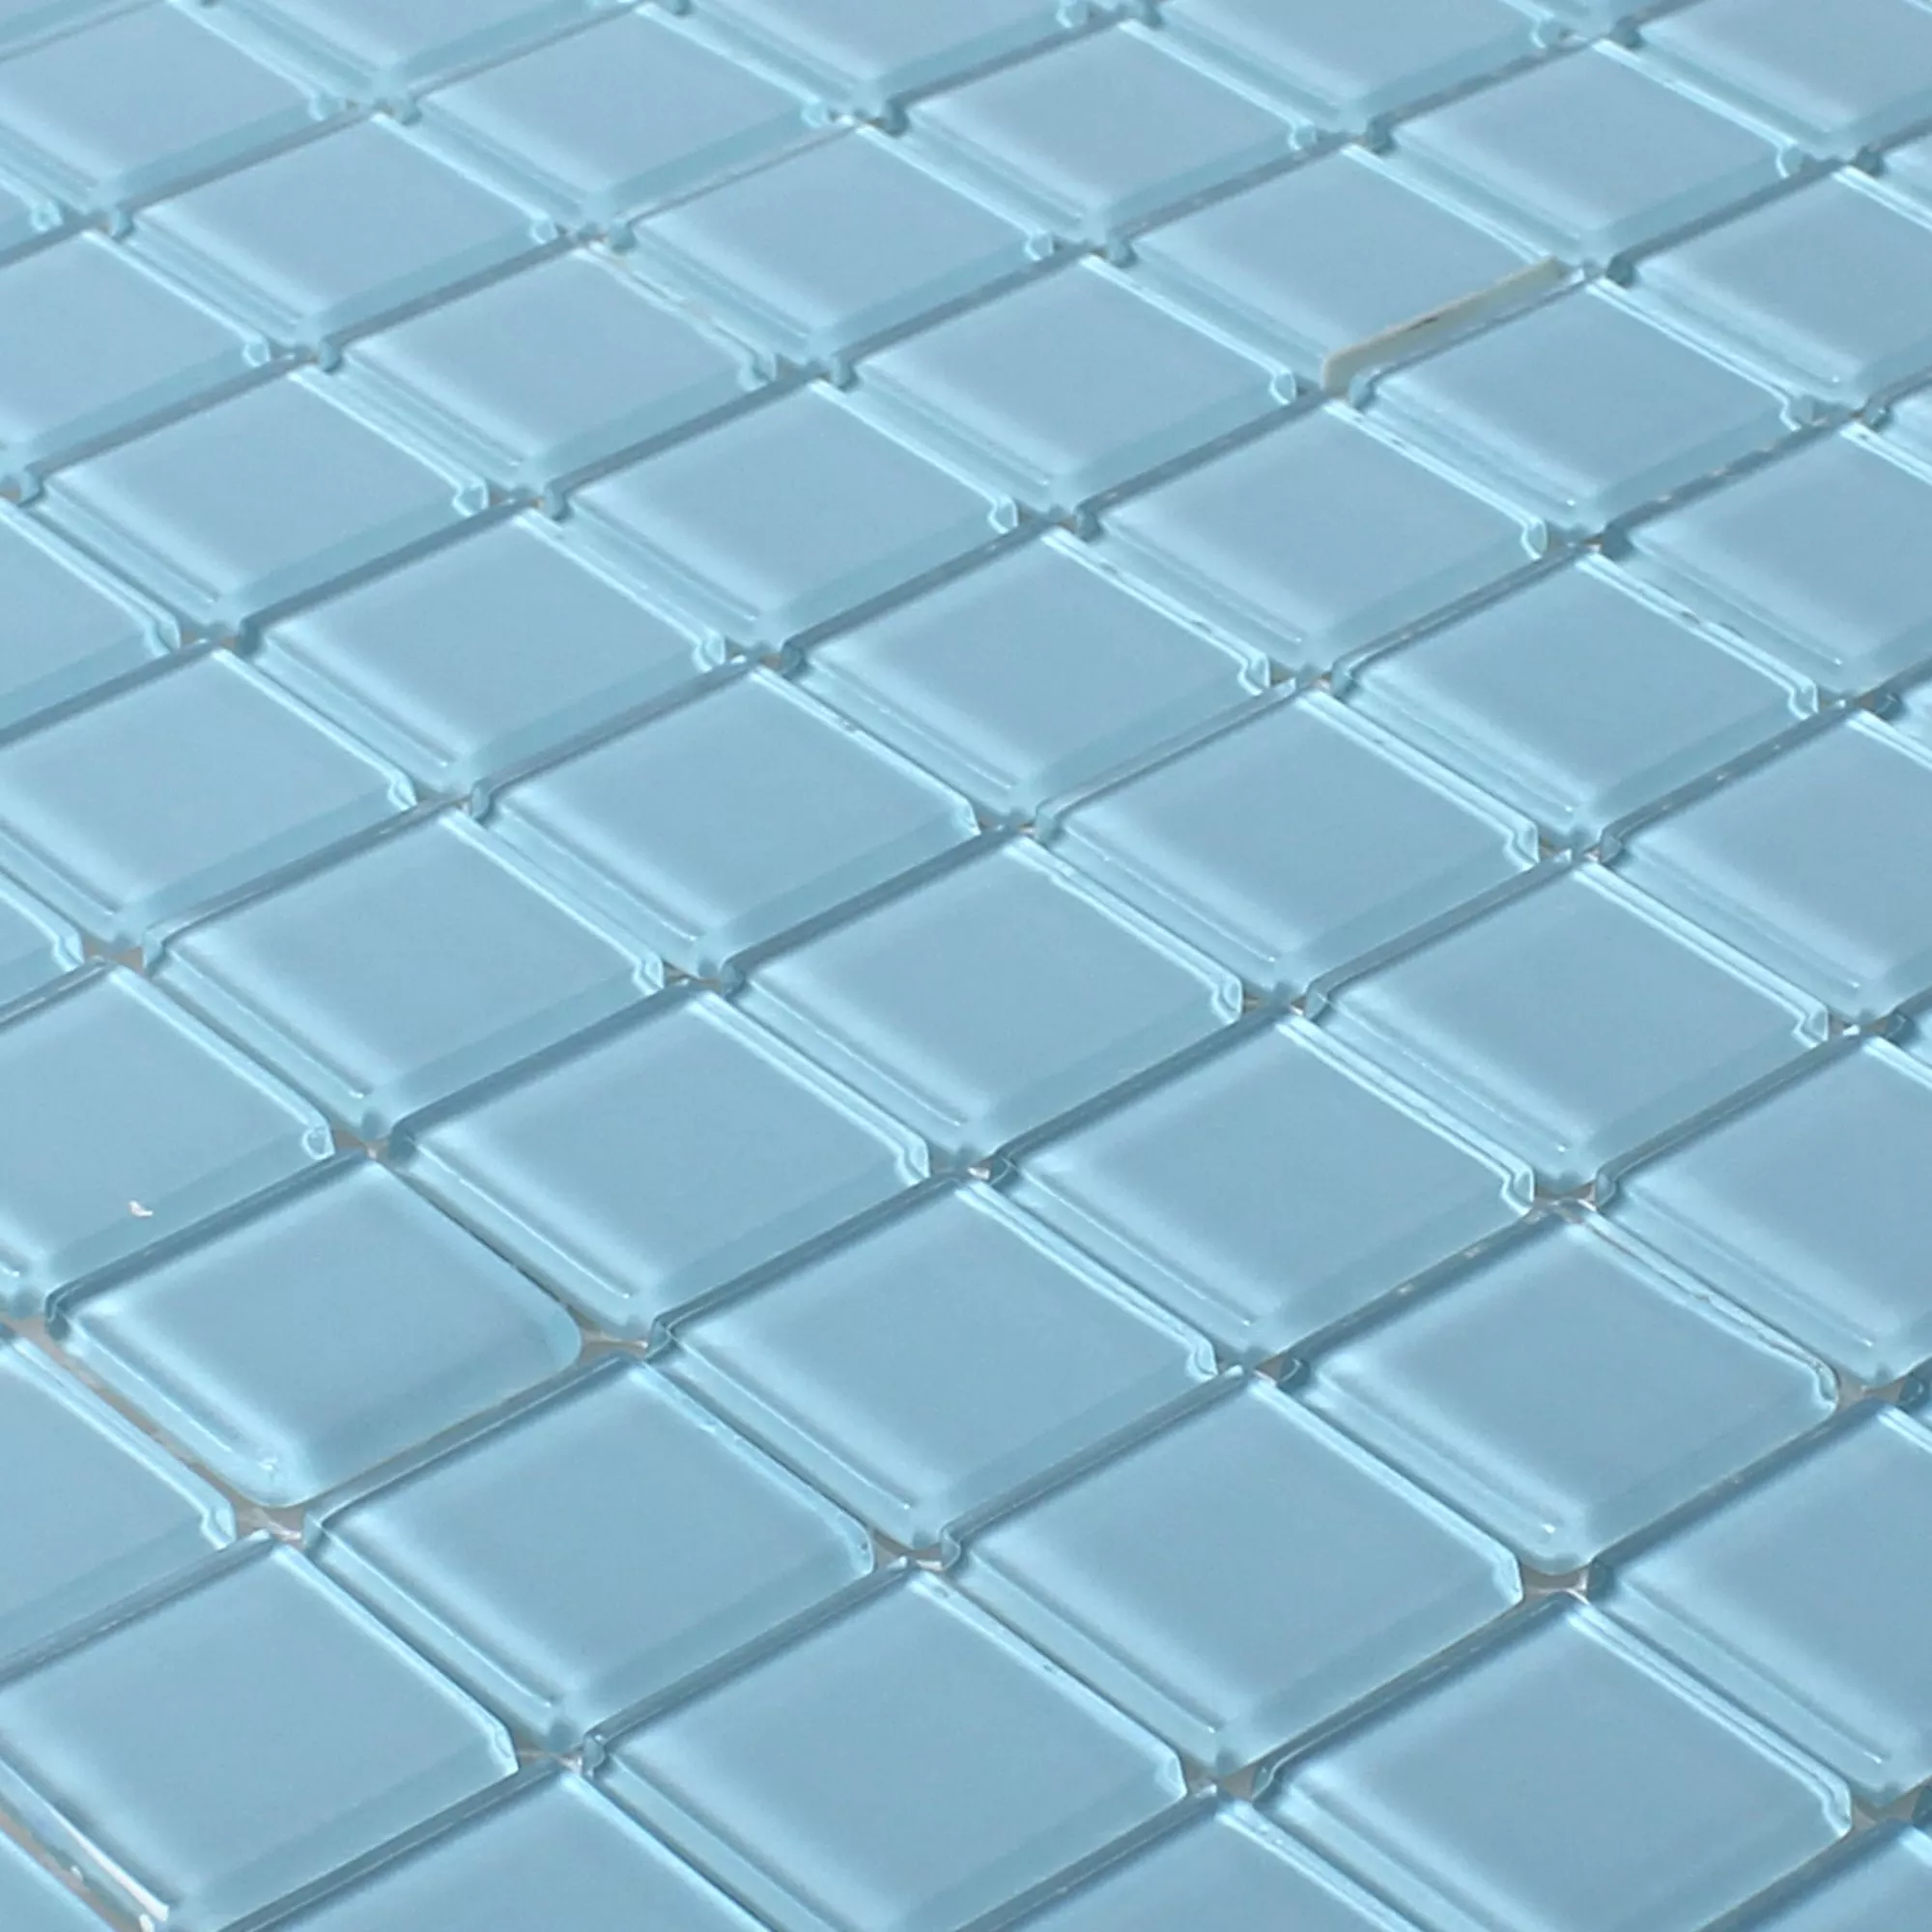 Glass Mosaic Tiles Florida Light Blue